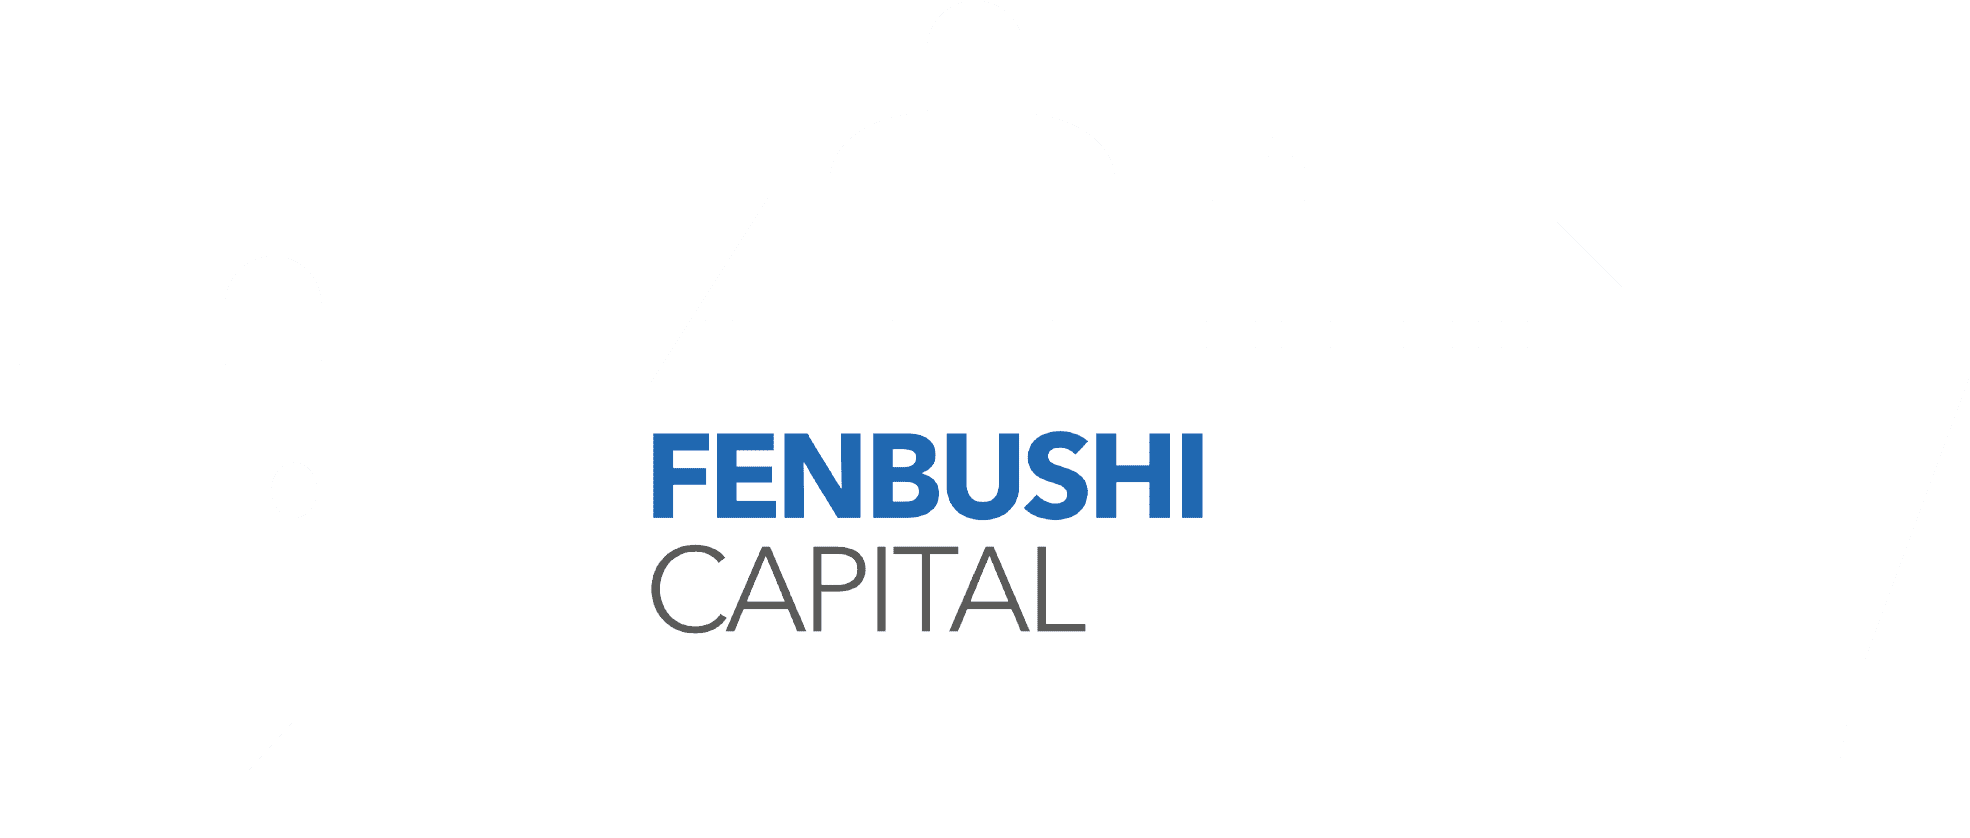 Fenbushi ship